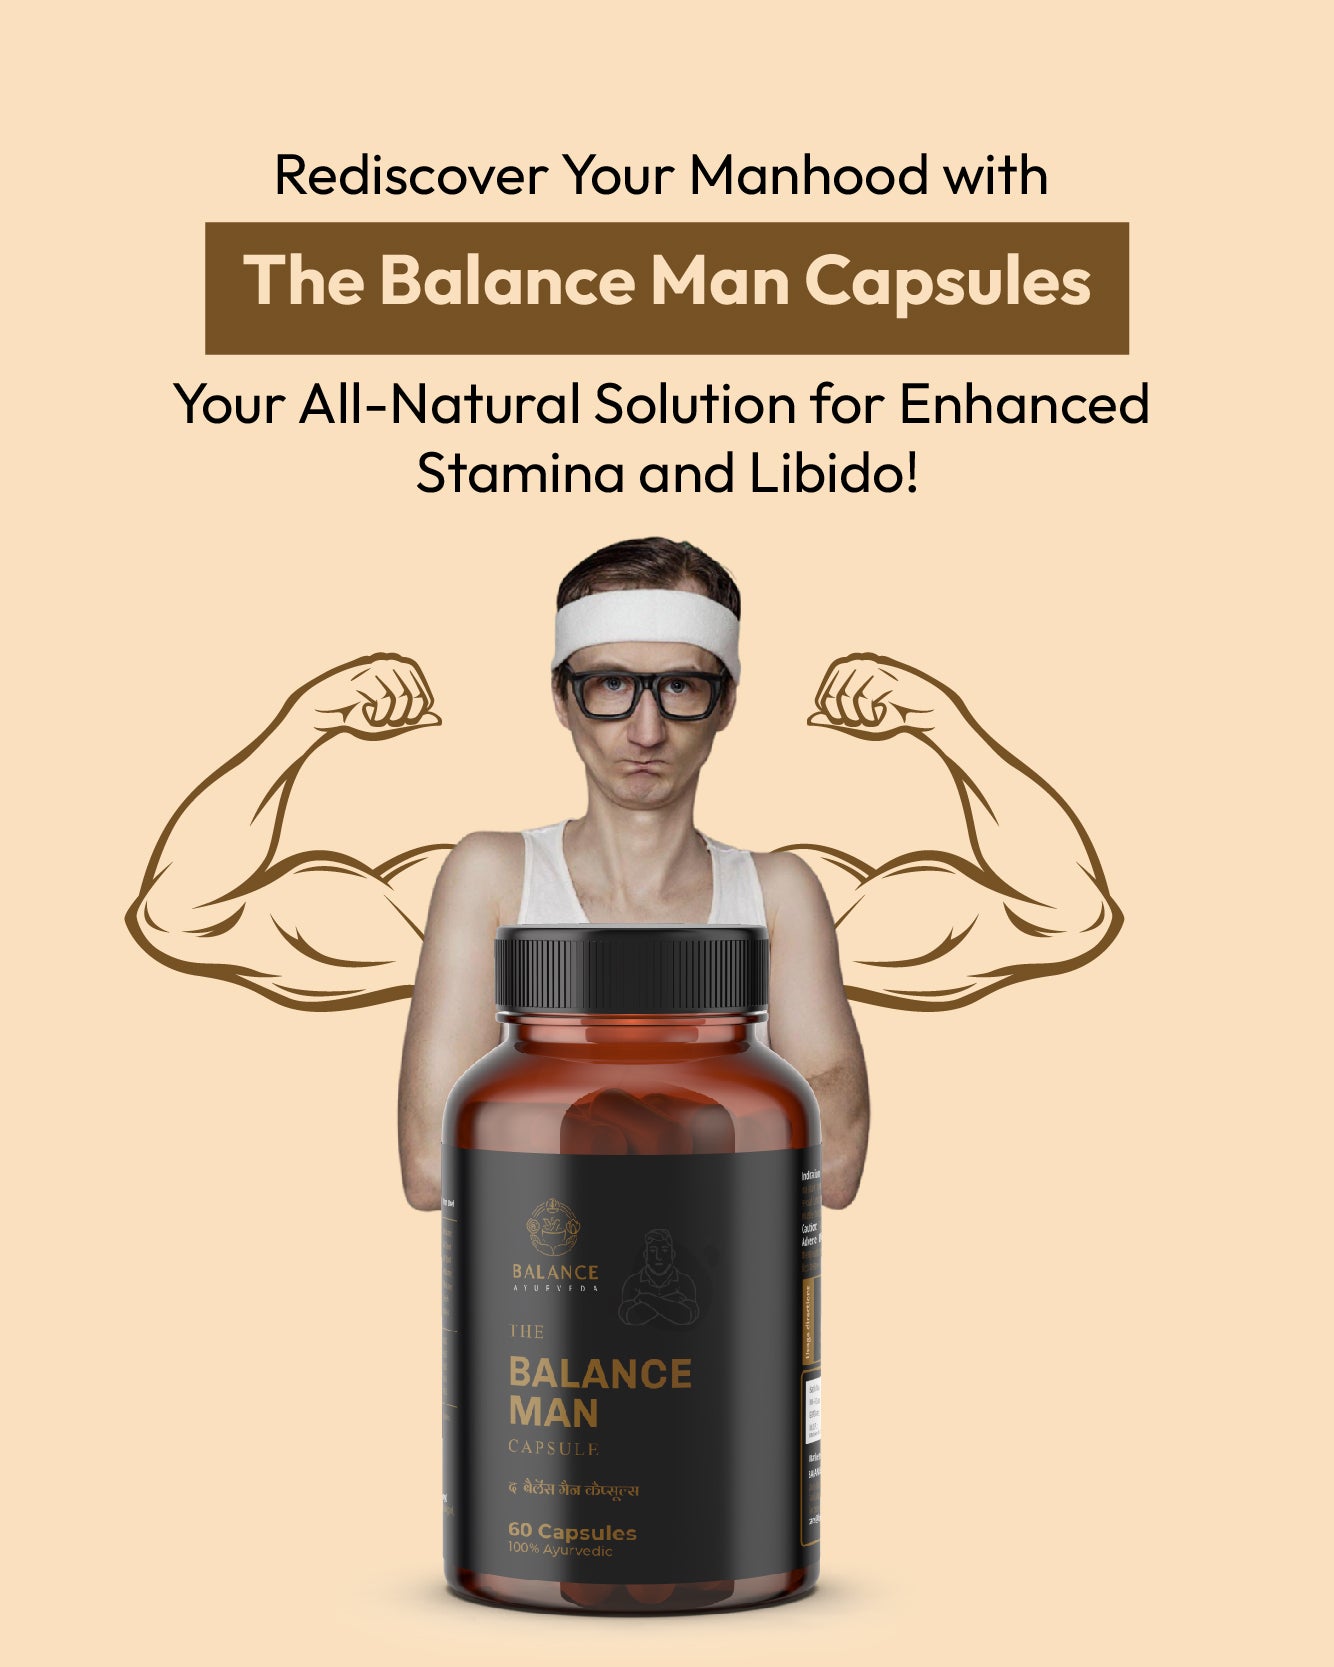 The Balance Man Capsules